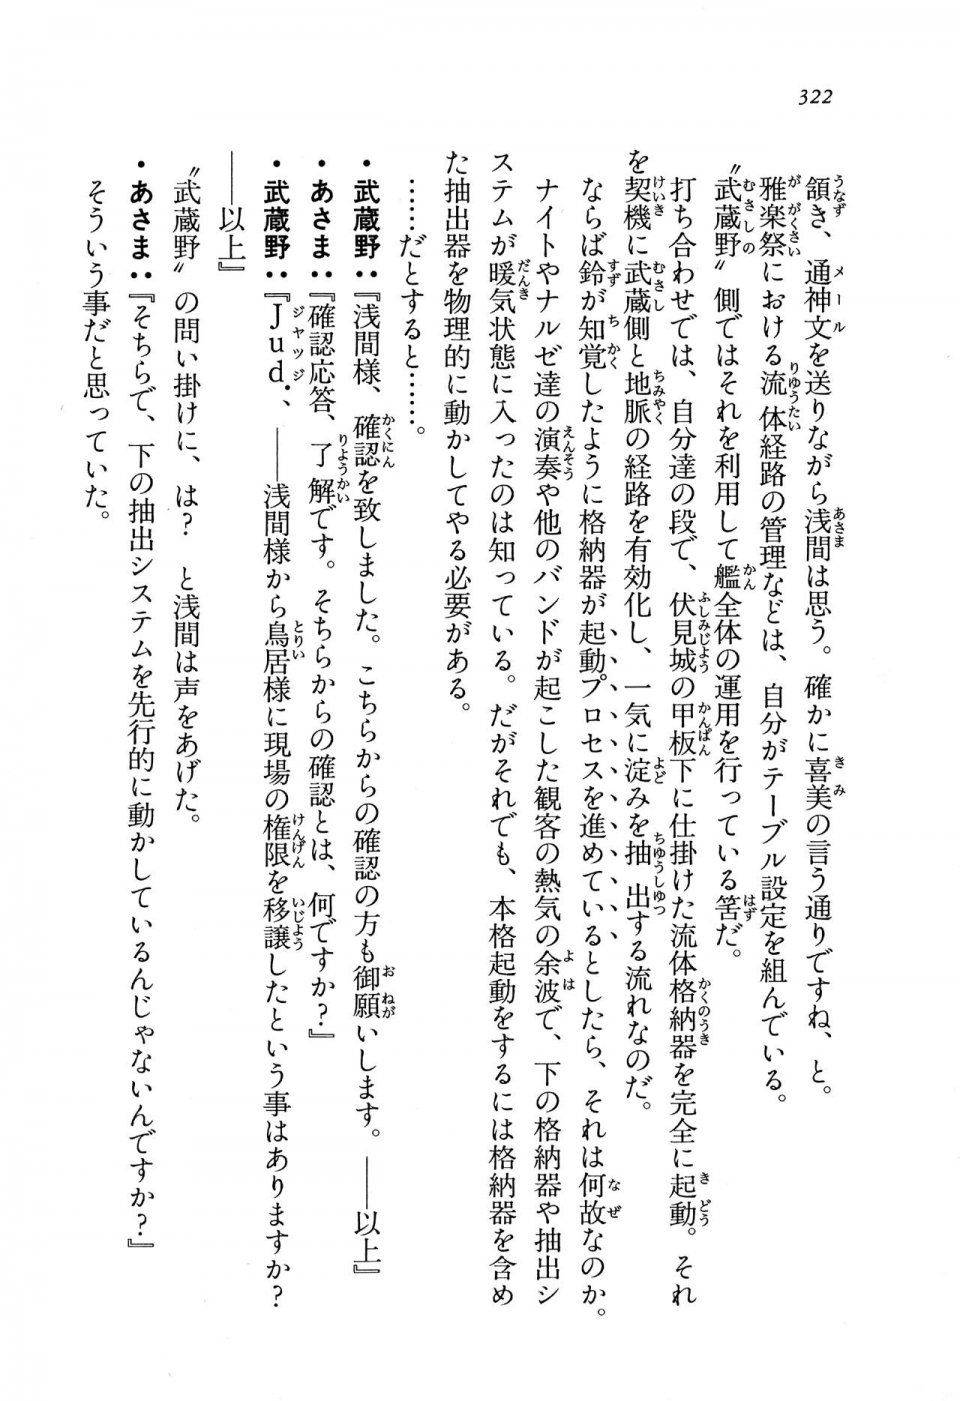 Kyoukai Senjou no Horizon BD Special Mininovel Vol 8(4B) - Photo #326